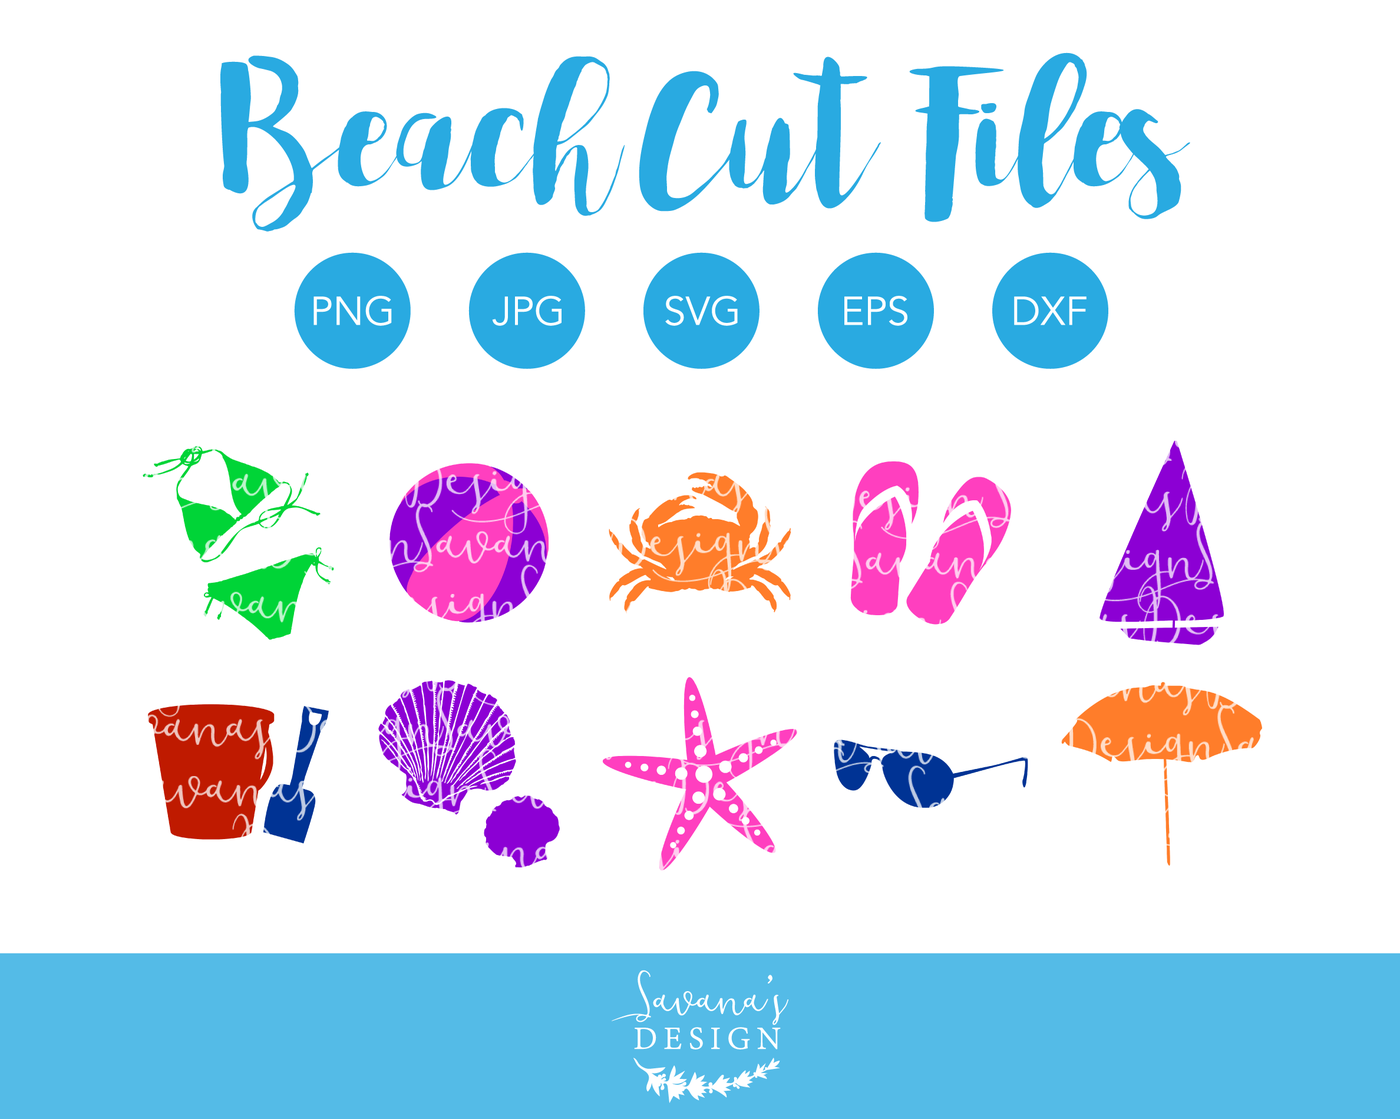 Beach Svg Files Beach Cut File Beach Dxf Beach Vacation Svg Bikini Svg Beach Ball Svg Sailboat Svg Sea Shell Svg Seashell Svg Starfish Svg Crab Svg Flip Flop Svg Sunglasses Svg